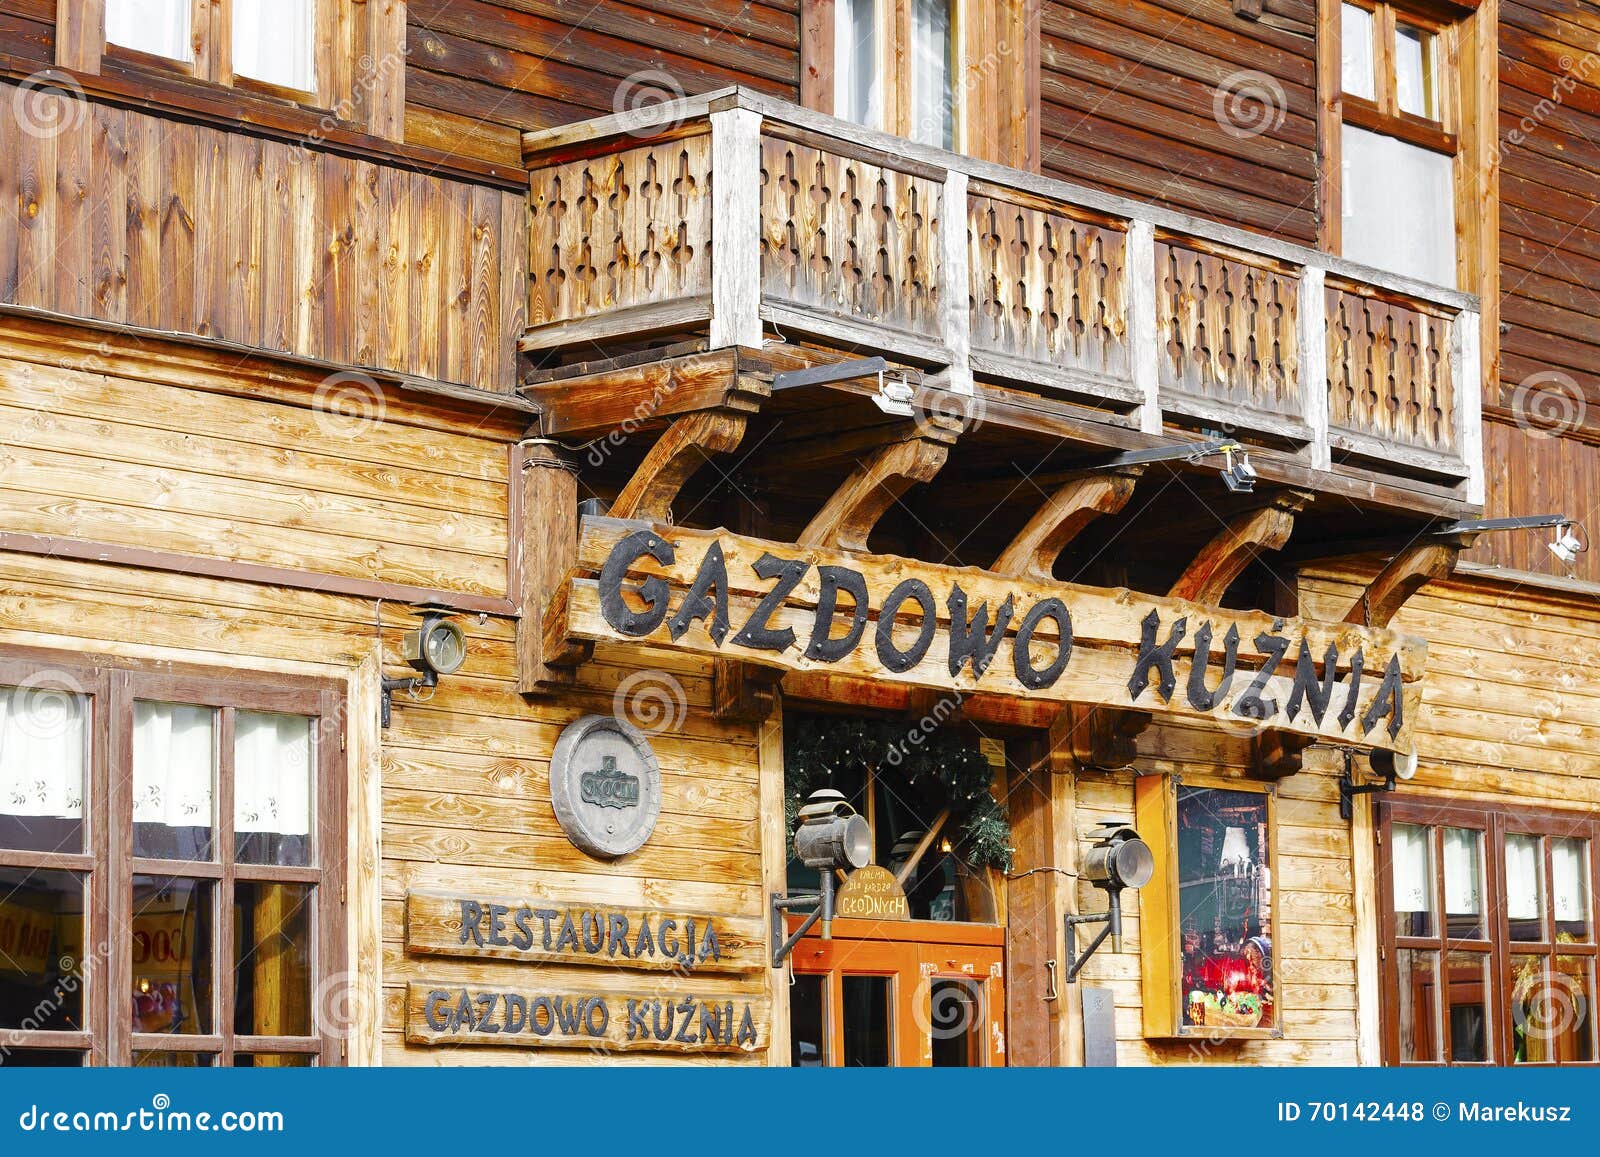 Restaurant S Name Over The Entrance In Zakopane Editorial Stock Photo